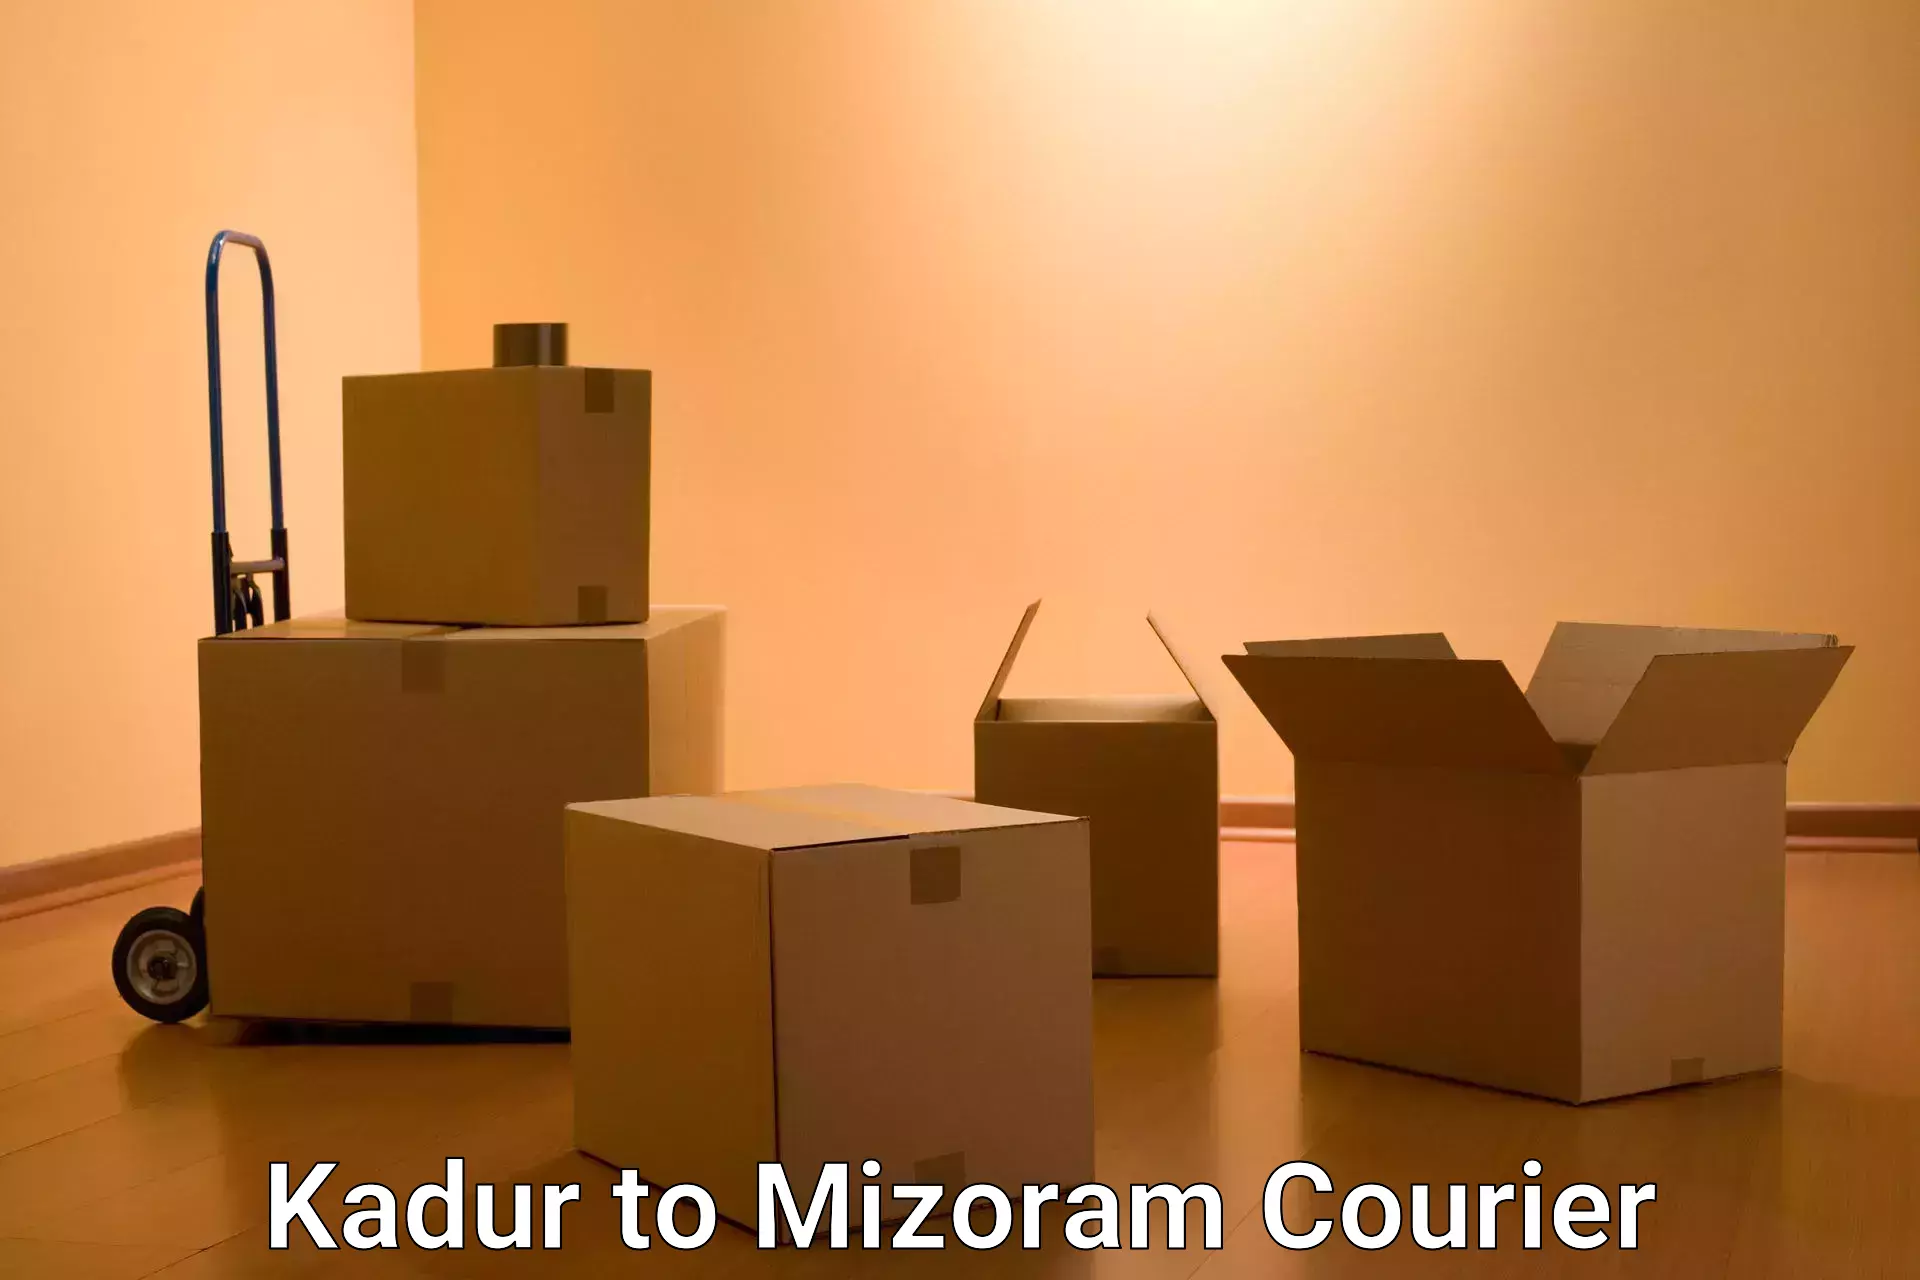 Efficient order fulfillment Kadur to Mizoram